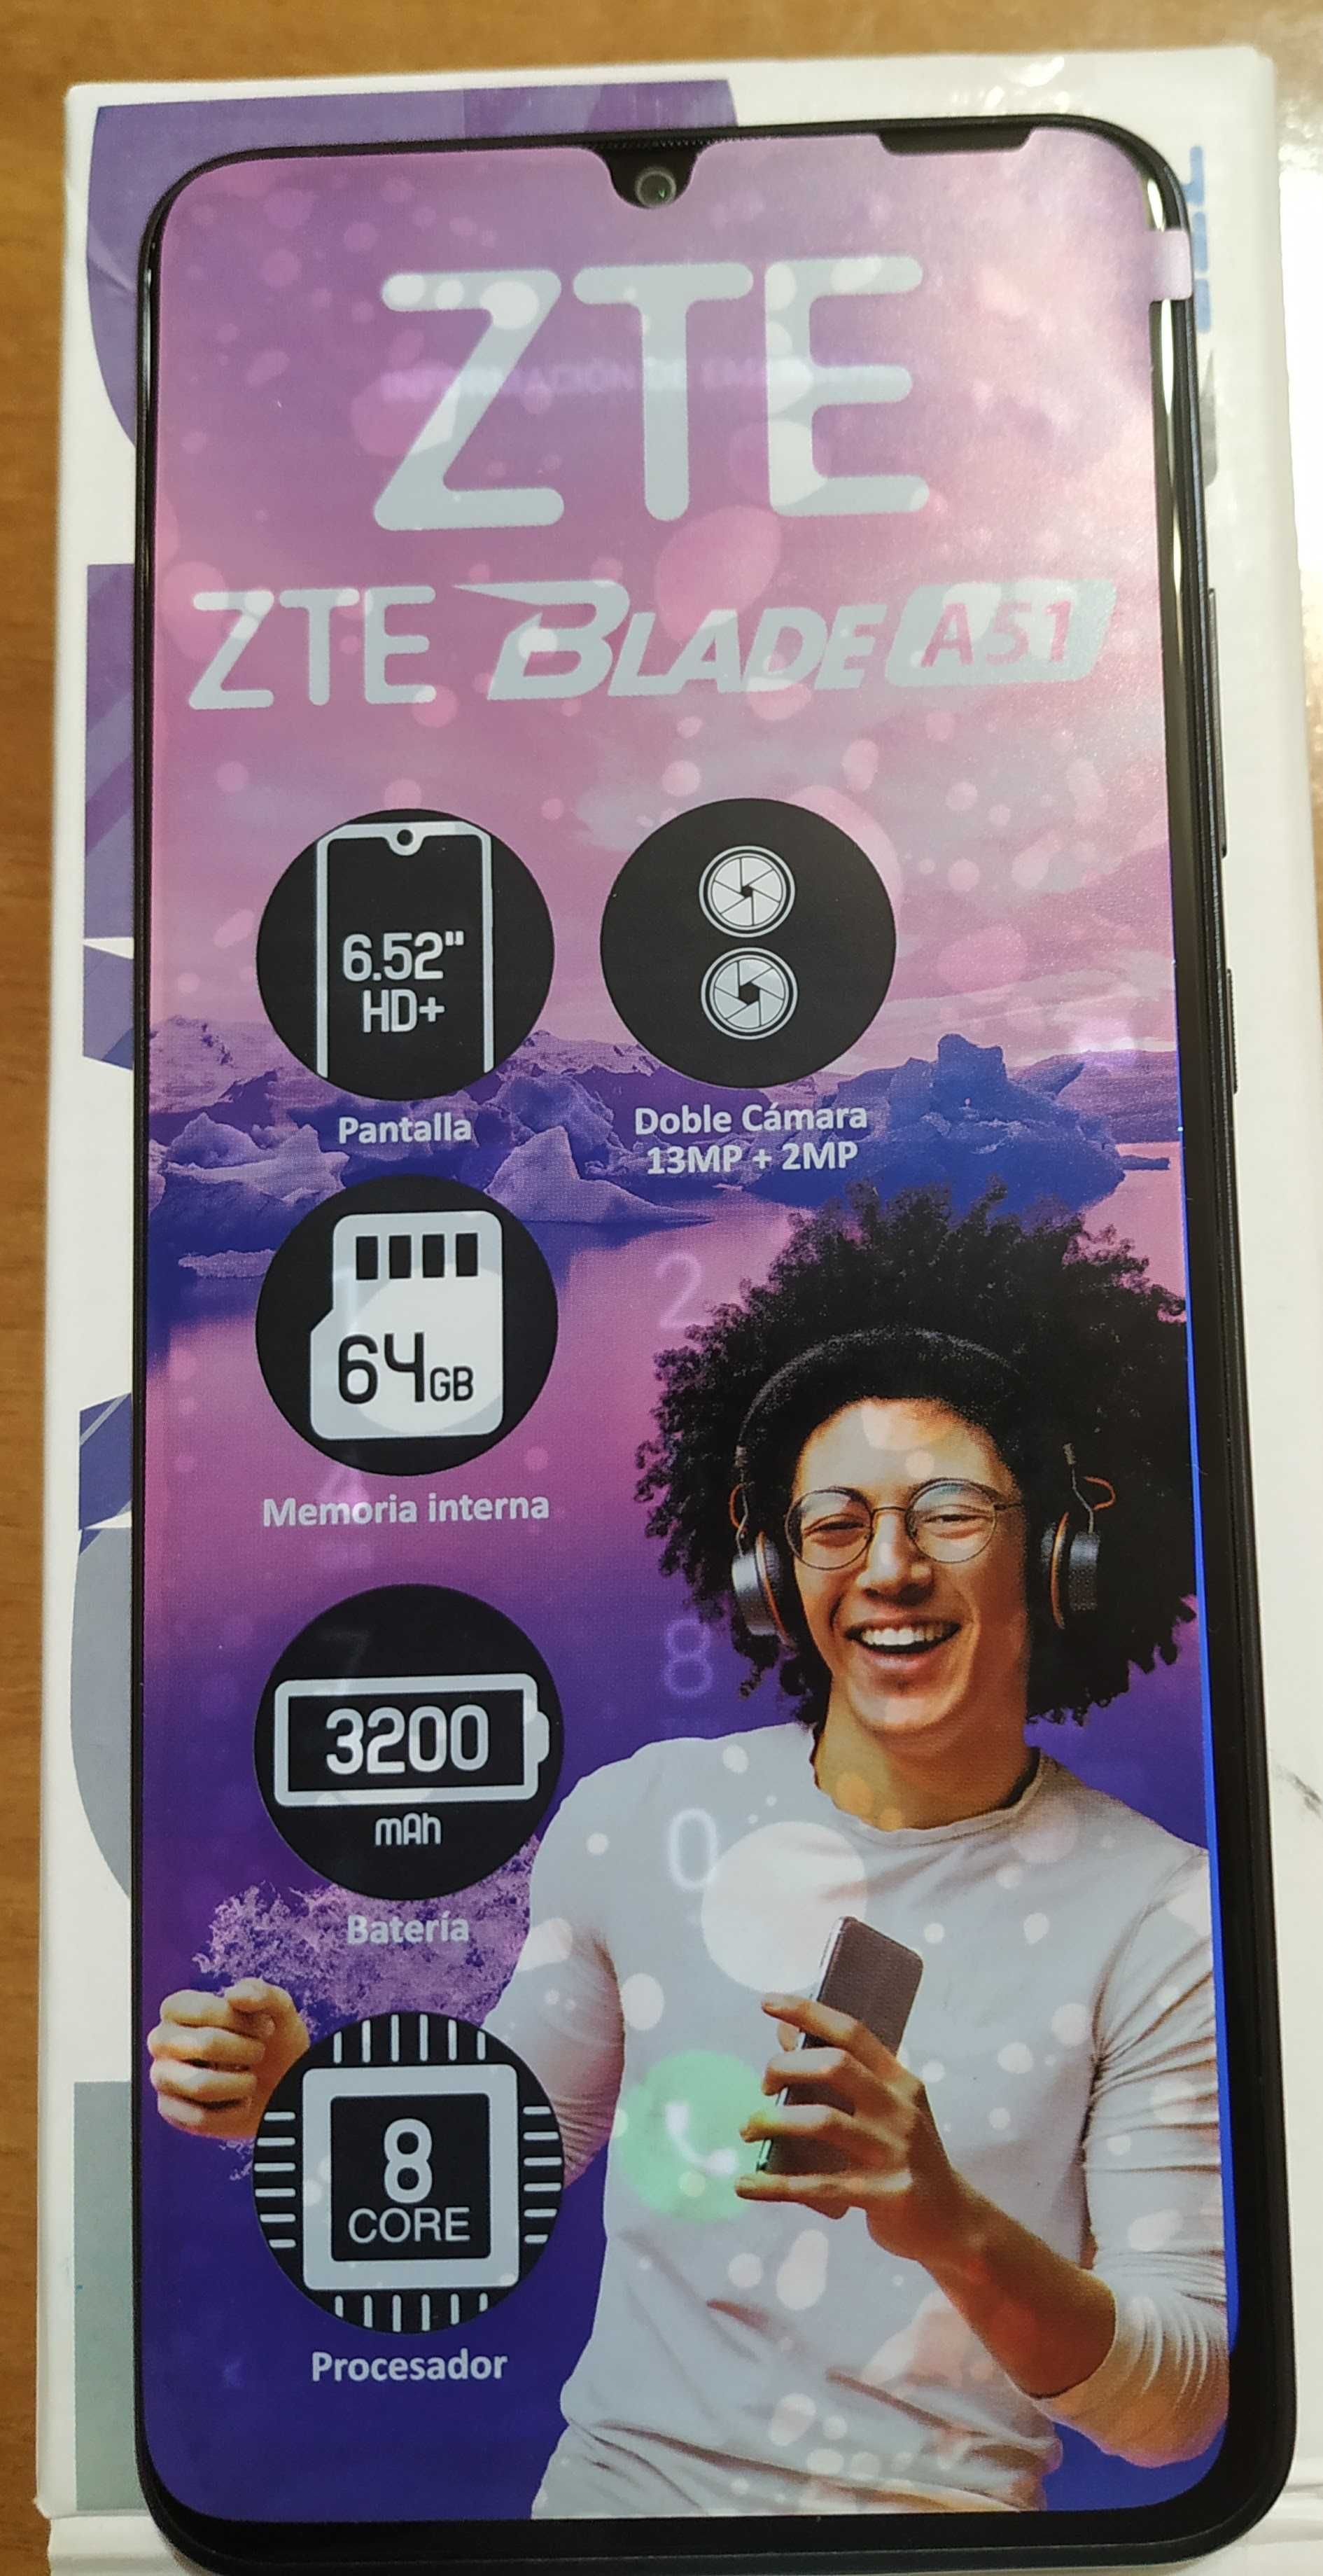 Смартфон ZTE Blade A51 2/64GB Gray